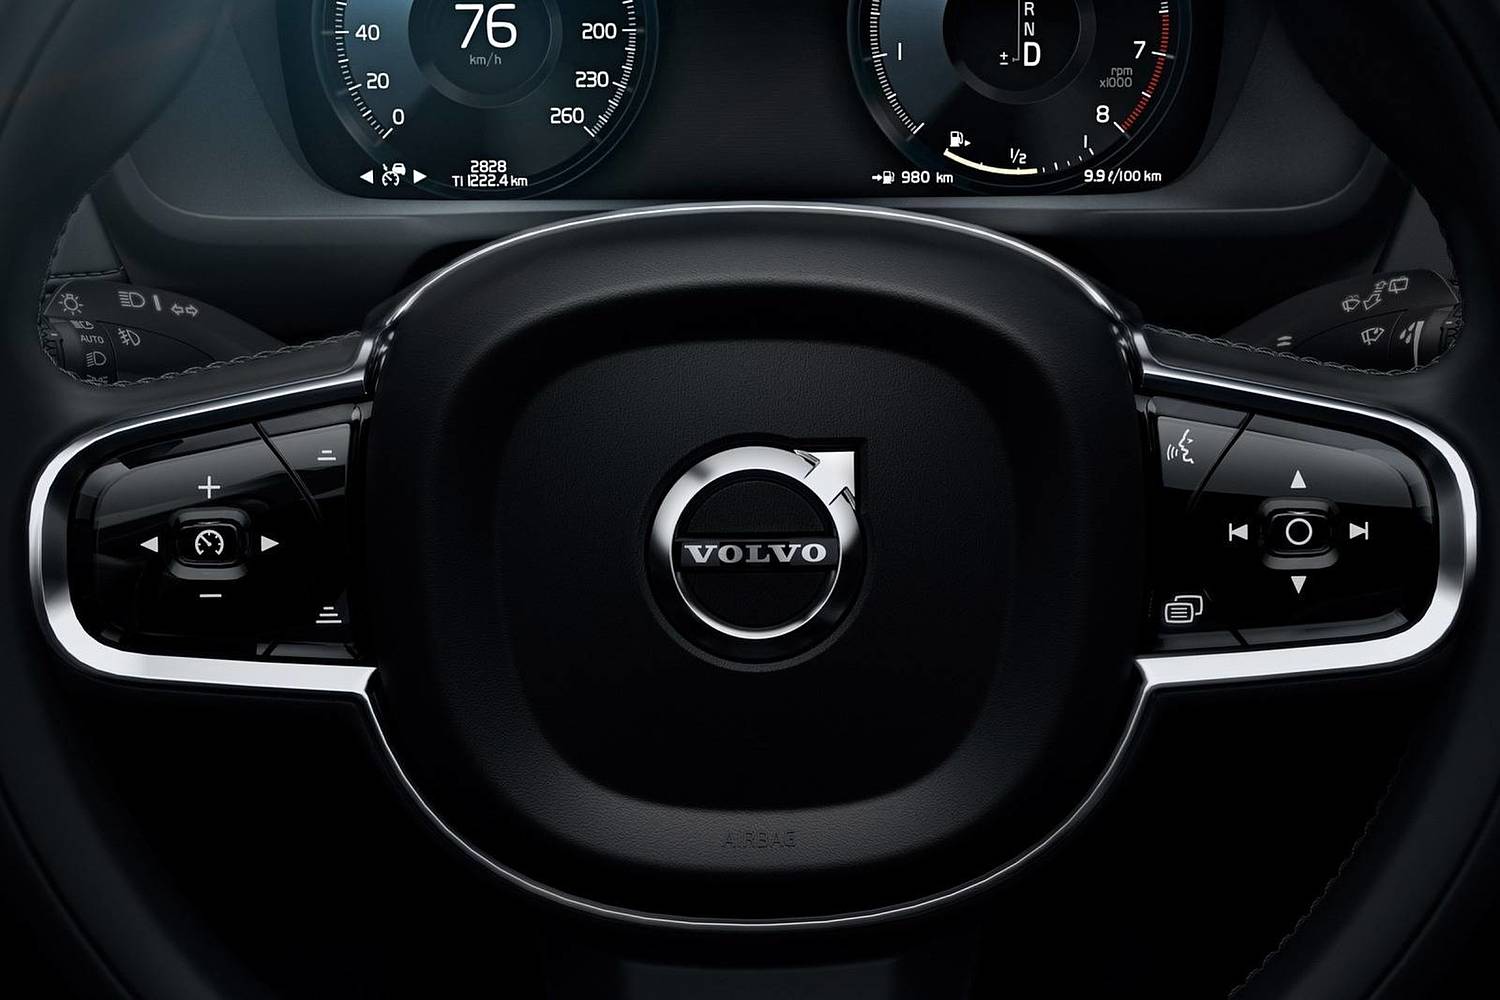 Volvo XC90 T6 Inscription 4dr SUV Steering Wheel Detail (2016 model year shown)